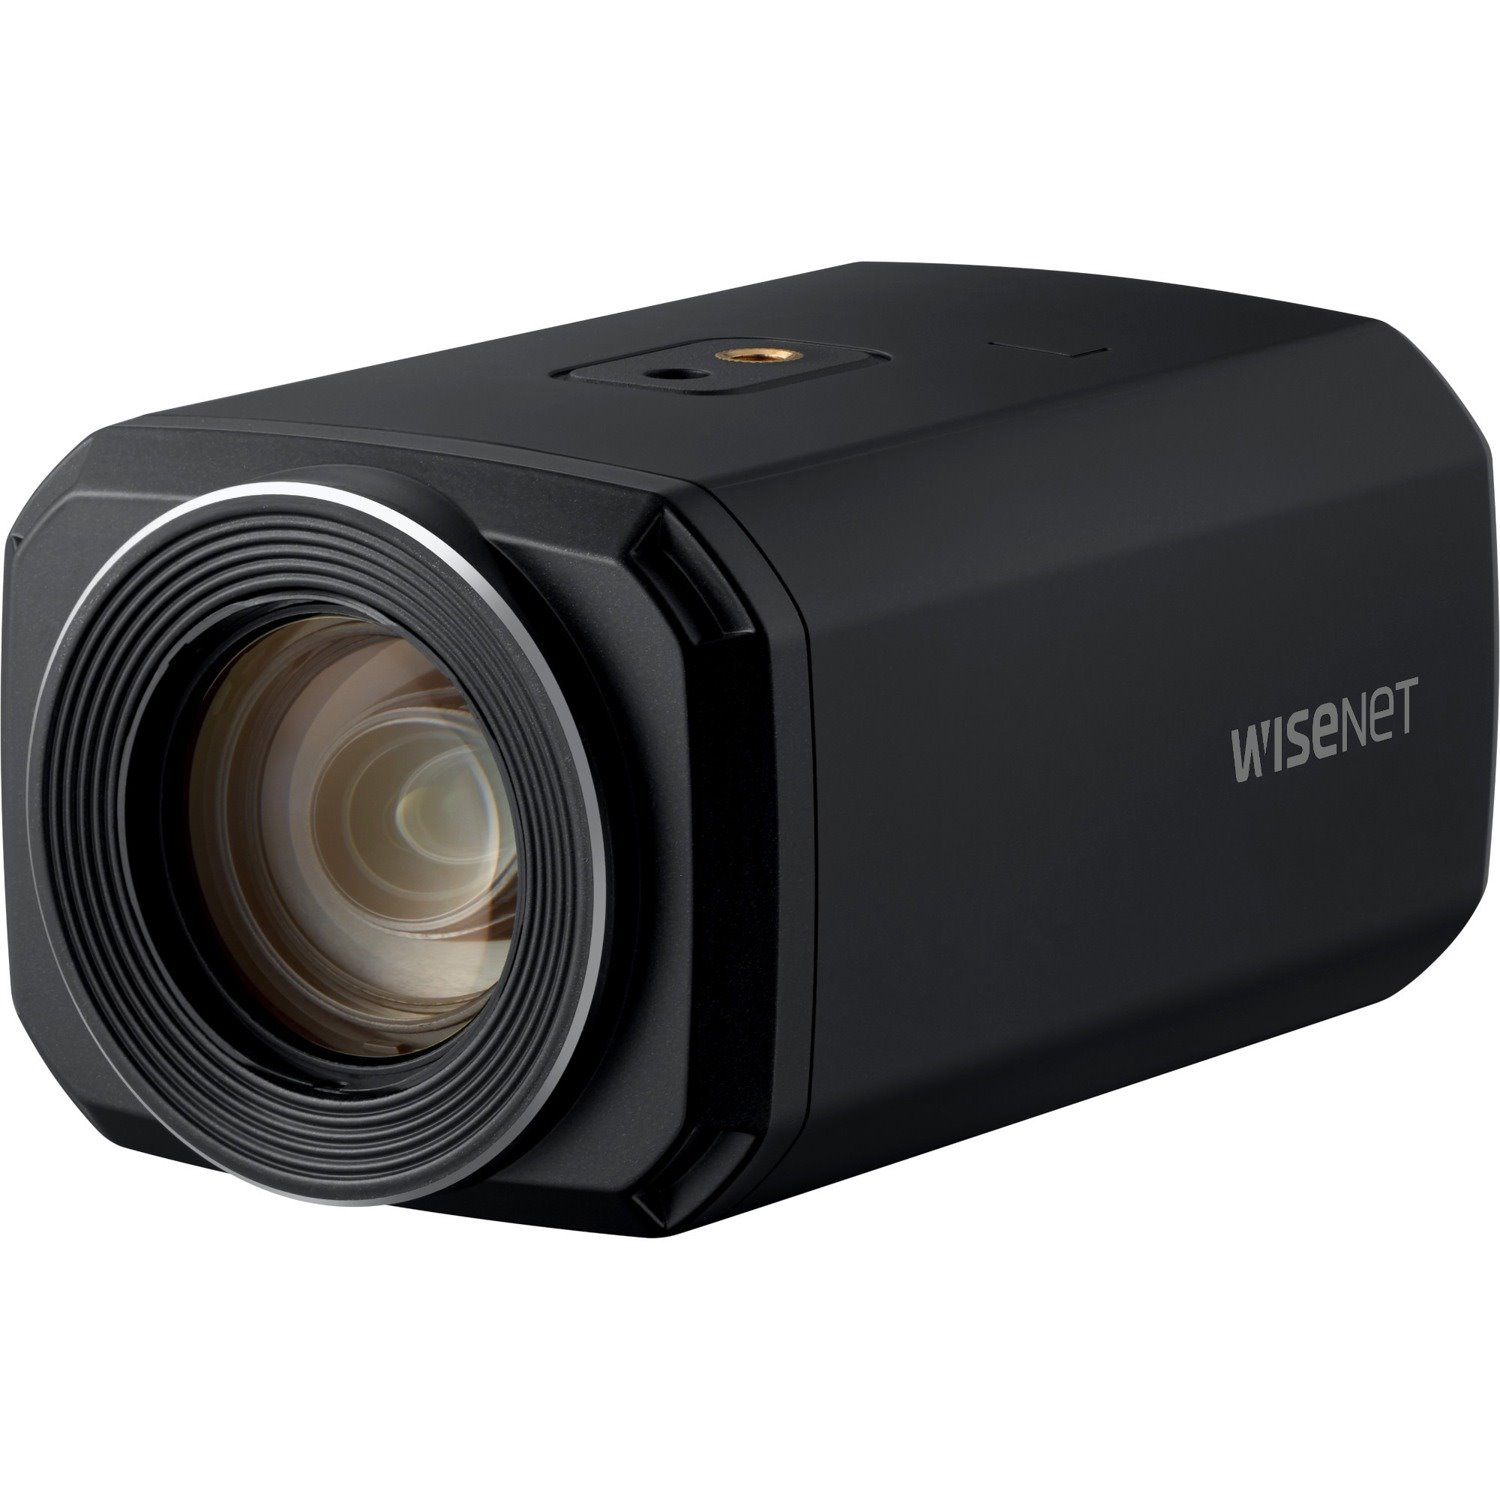 Wisenet XNZ-6320A 2 Megapixel Full HD Network Camera - Color - Box - Dark Gray